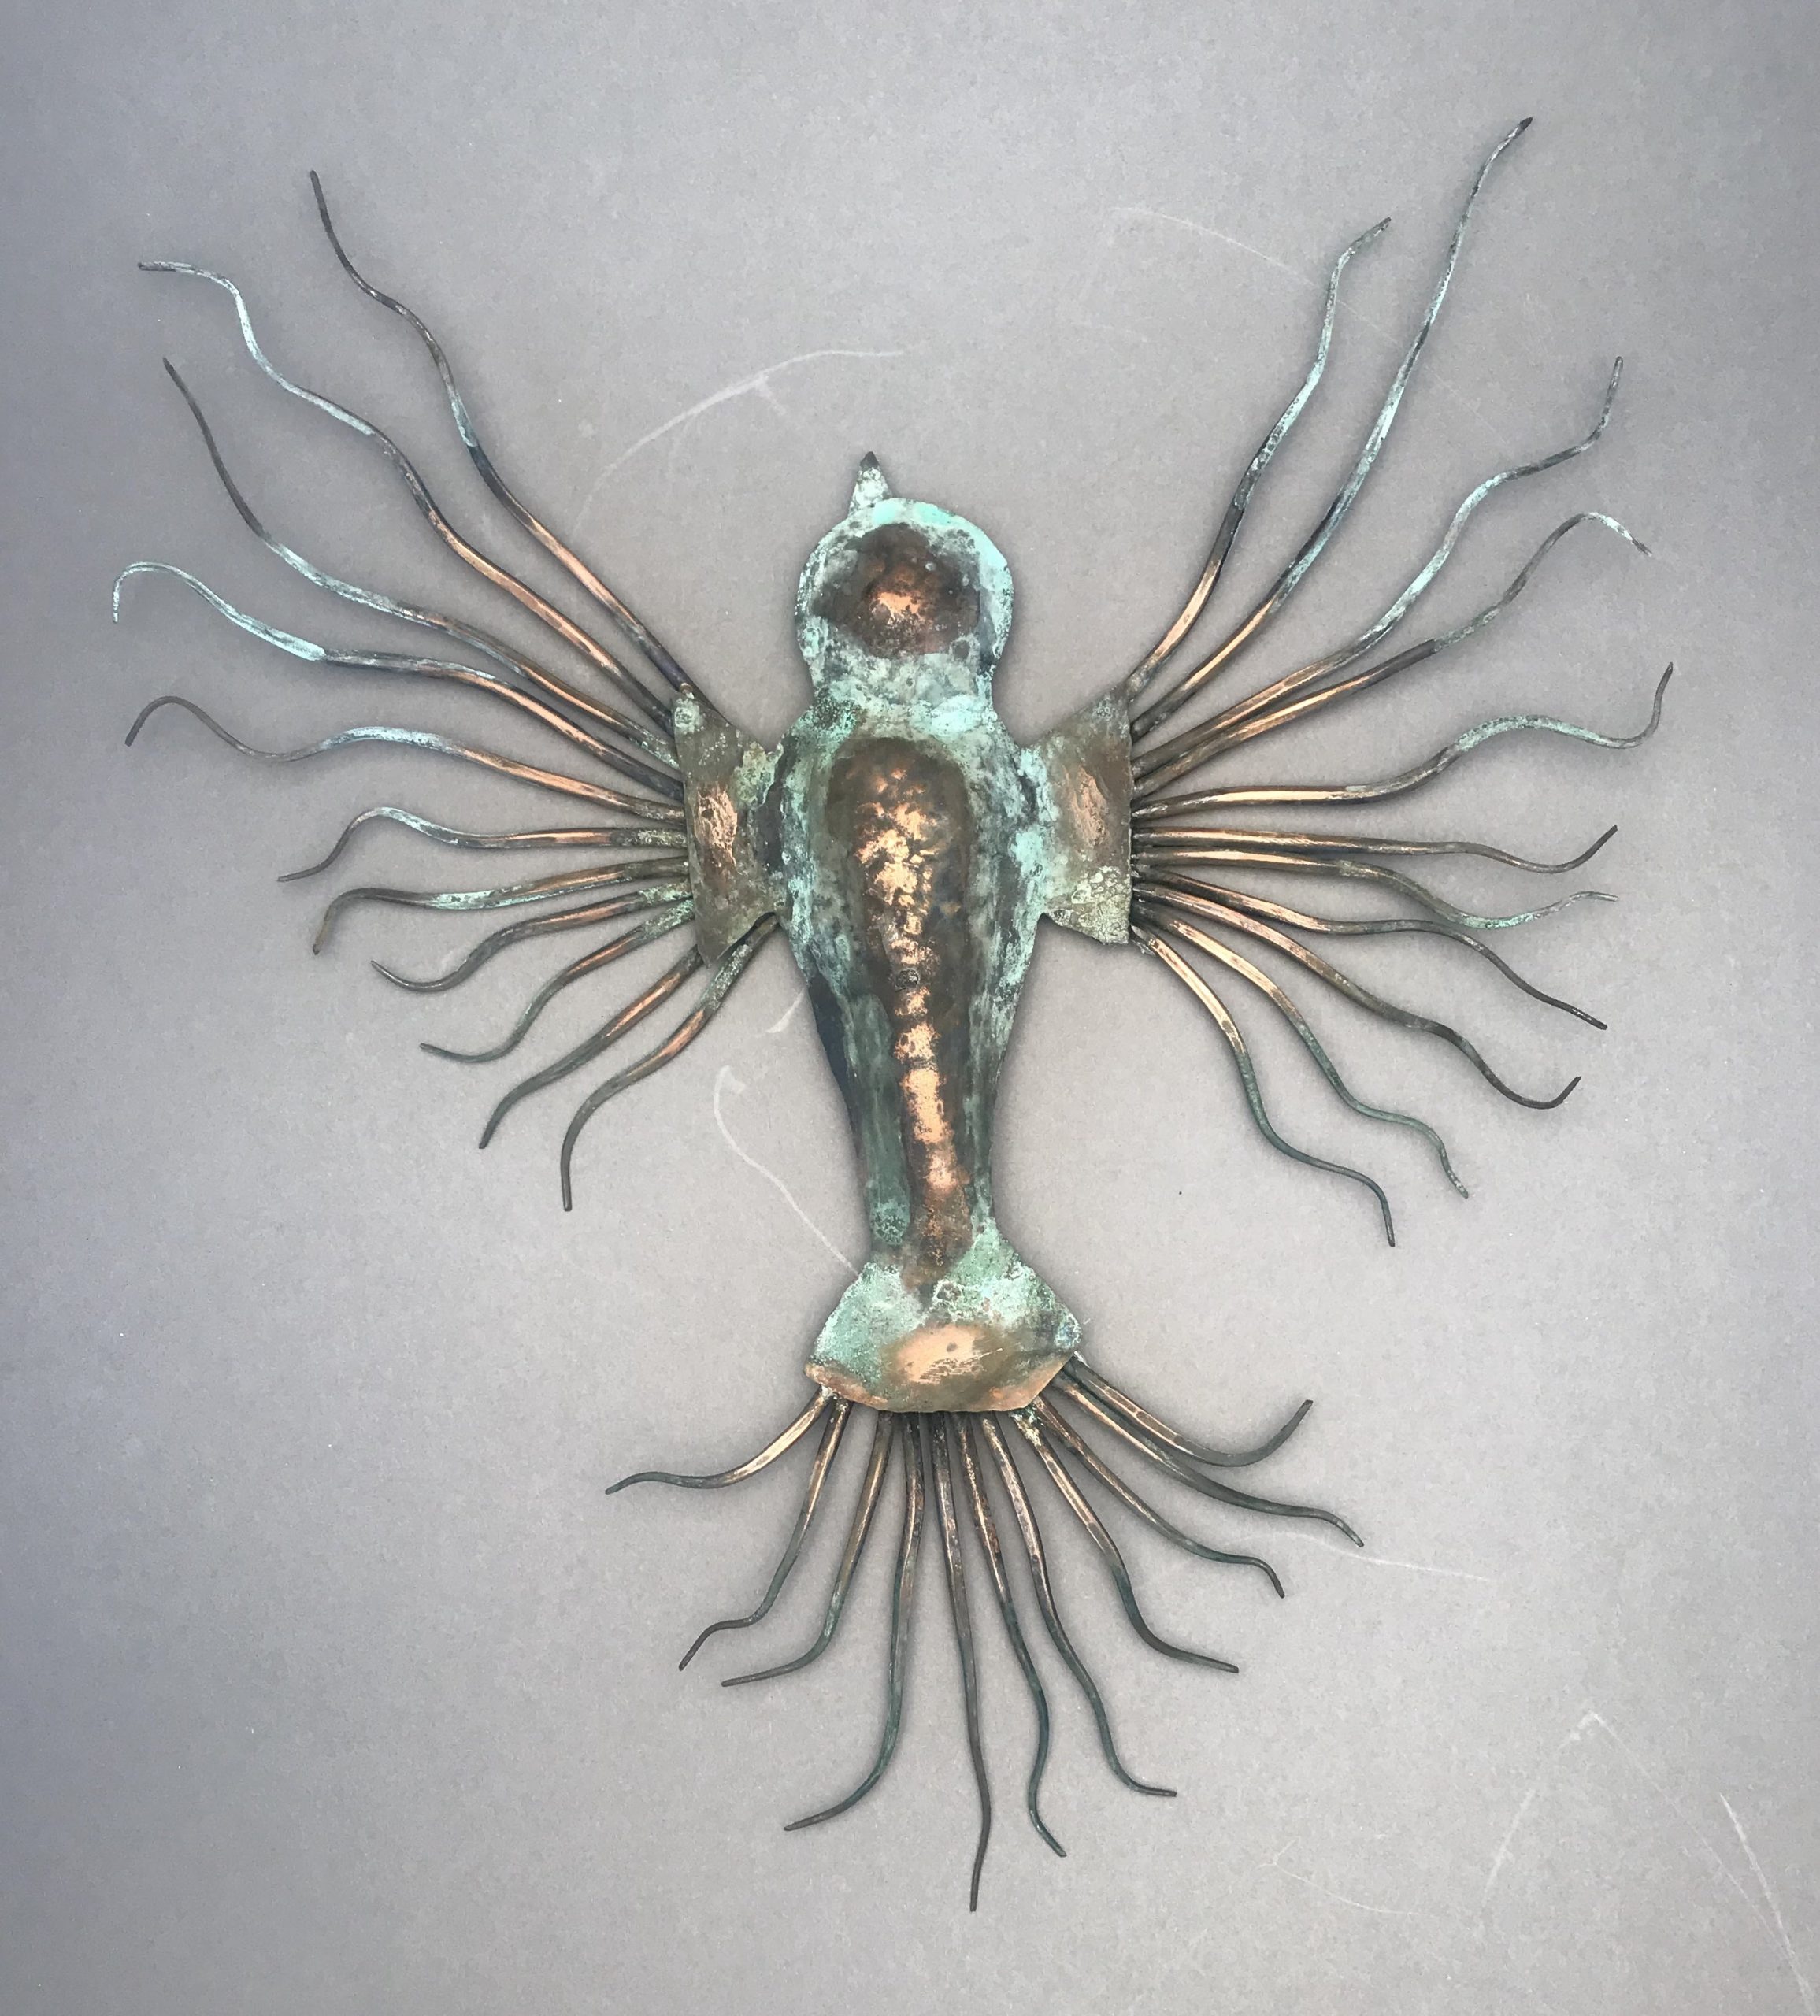 Metal sculpture of a fictional creature that combines sea slugs and birds